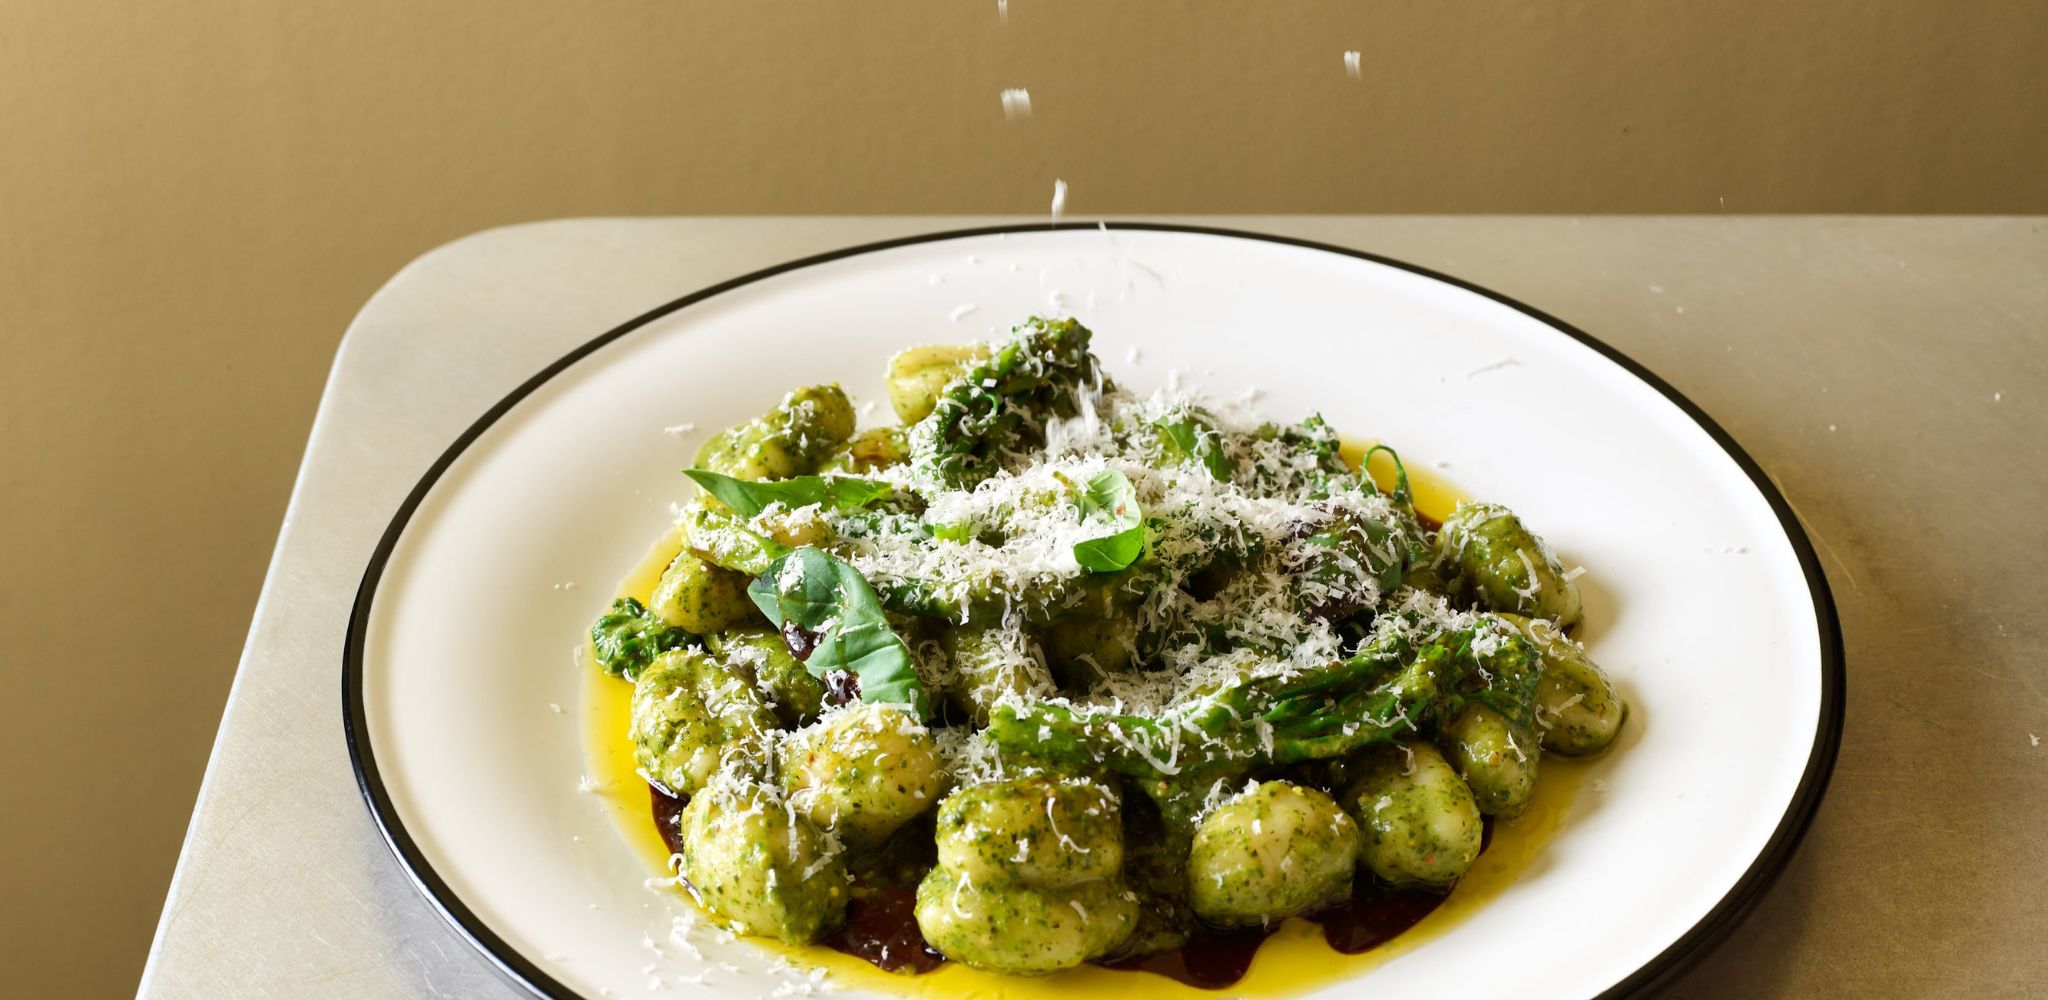 Pistacchio pesto gnocchi, brocoli, basil with grated parmesan on top